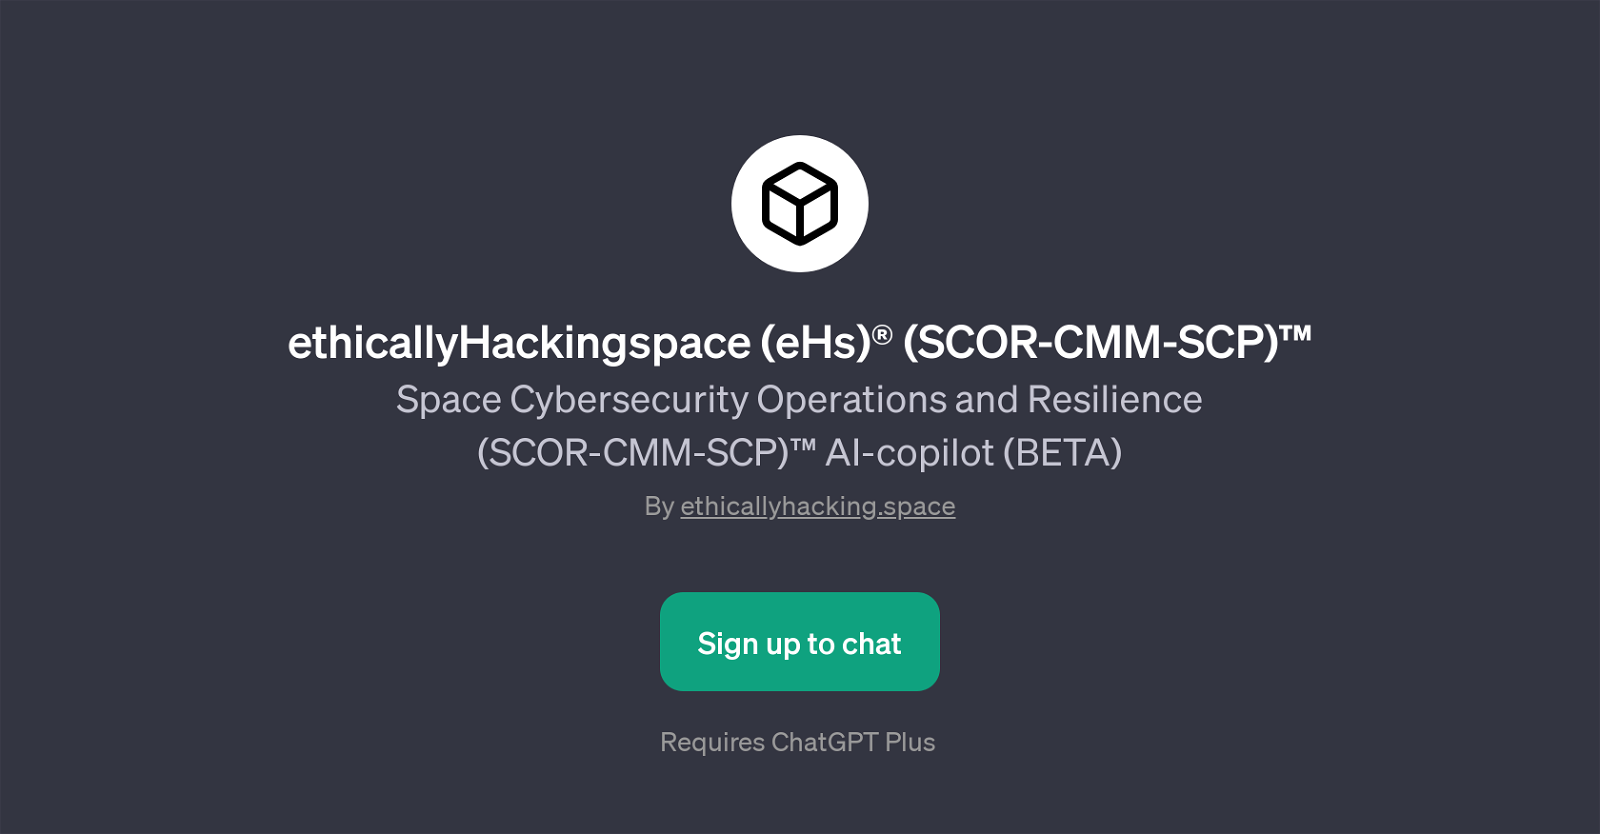 ethicallyHackingspace (eHs) (SCOR-CMM-SCP) website